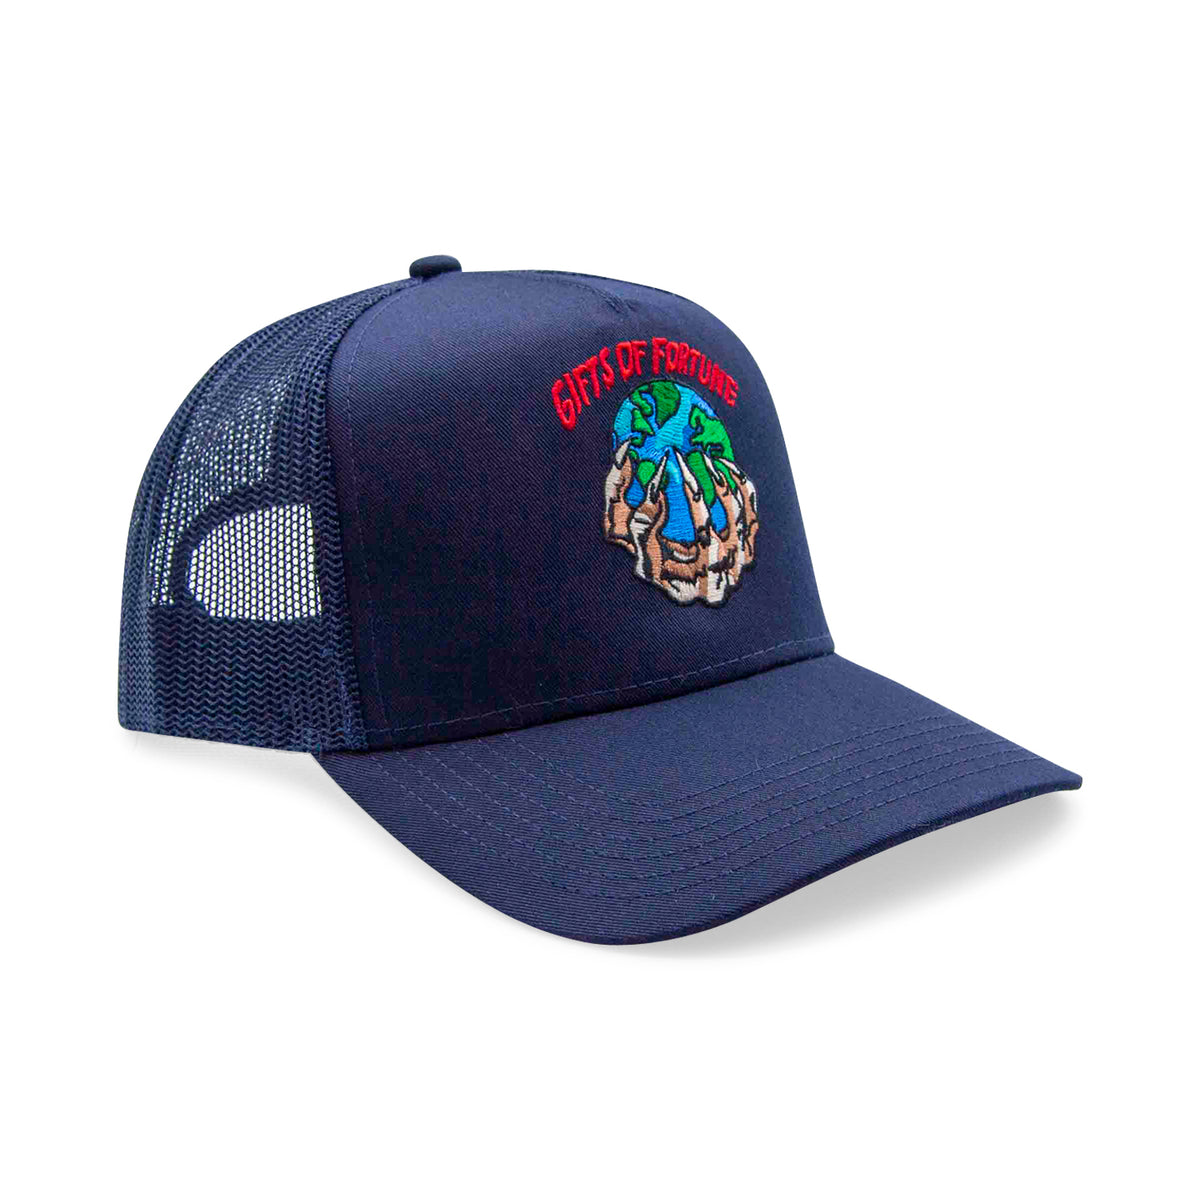 navy blue trucker hat 